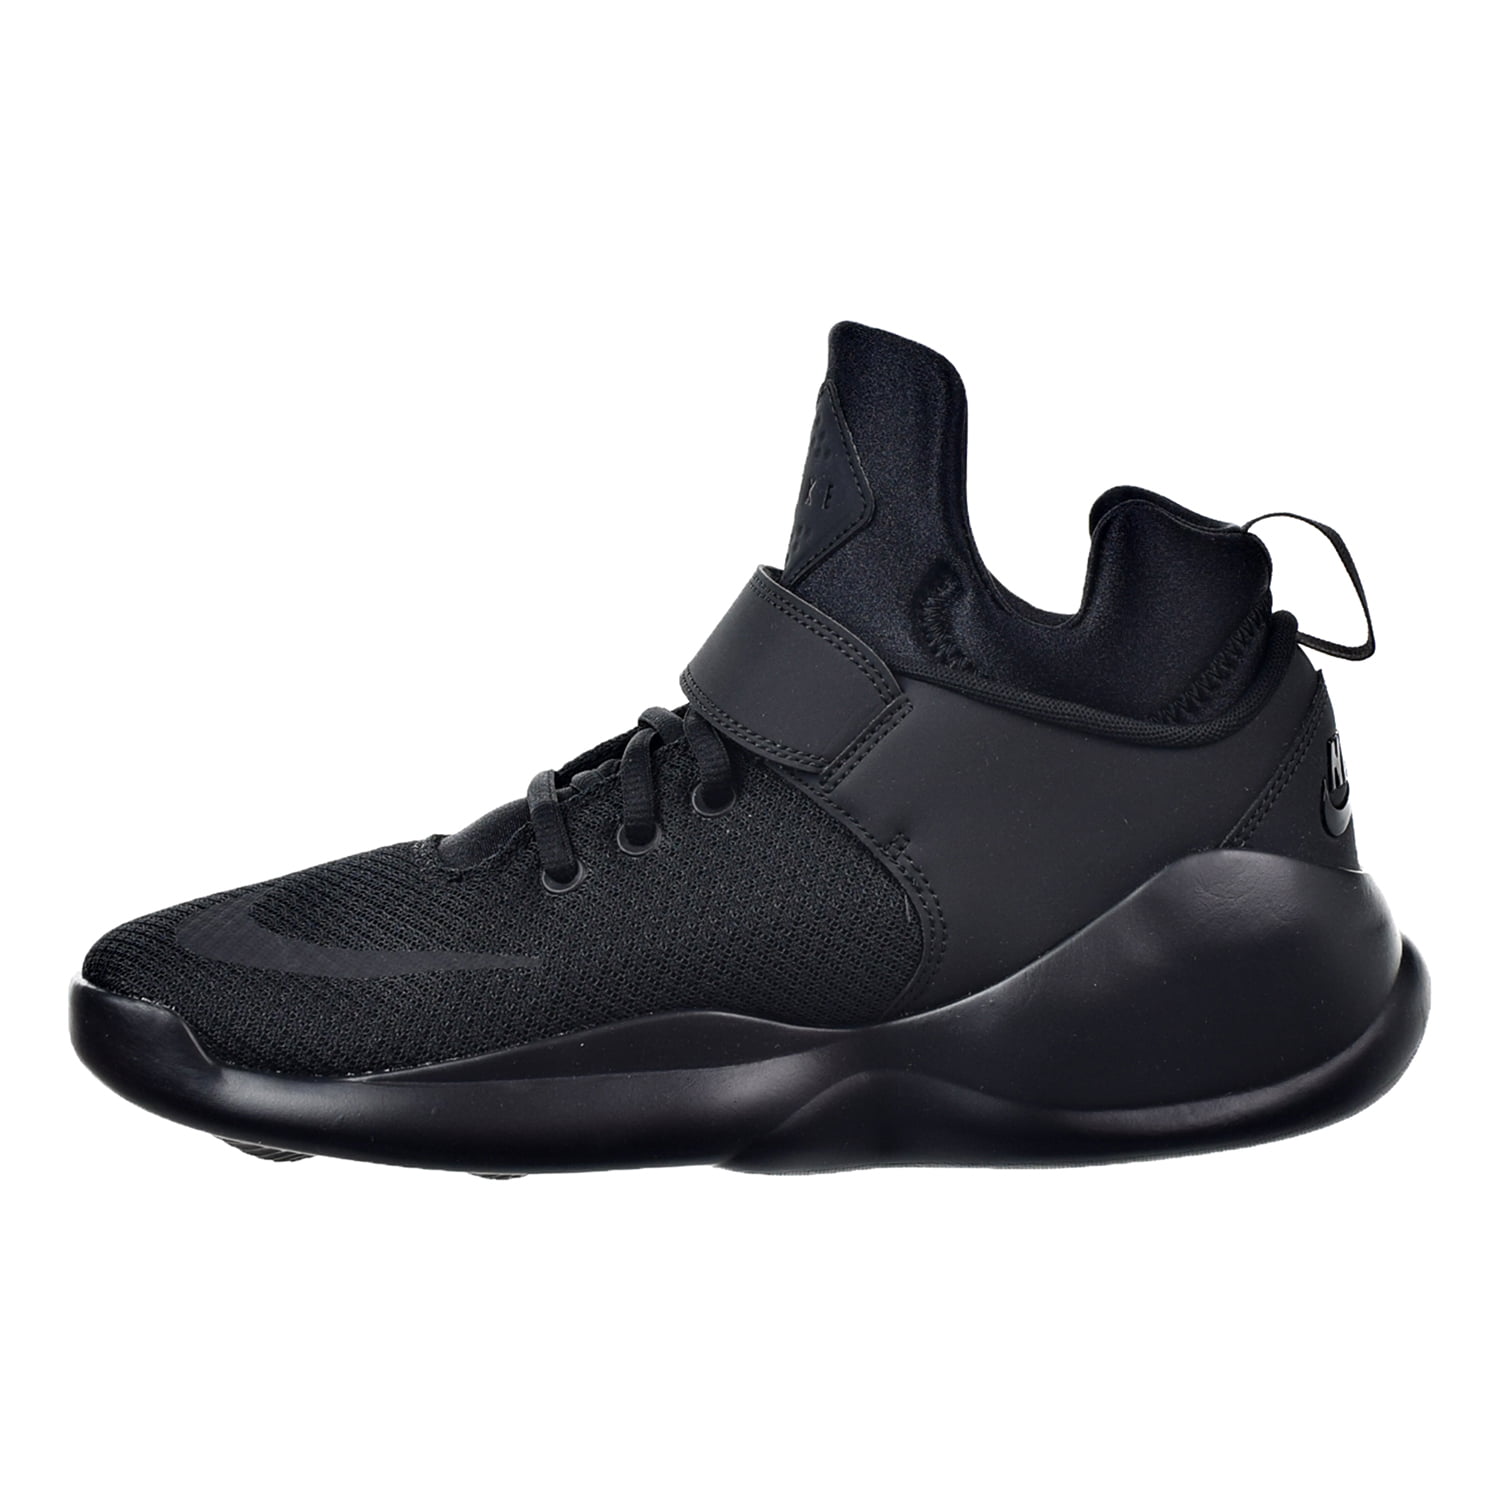 Kent conversie cement Nike Kwazi Men's Shoes Black/Black 844839-001 - Walmart.com